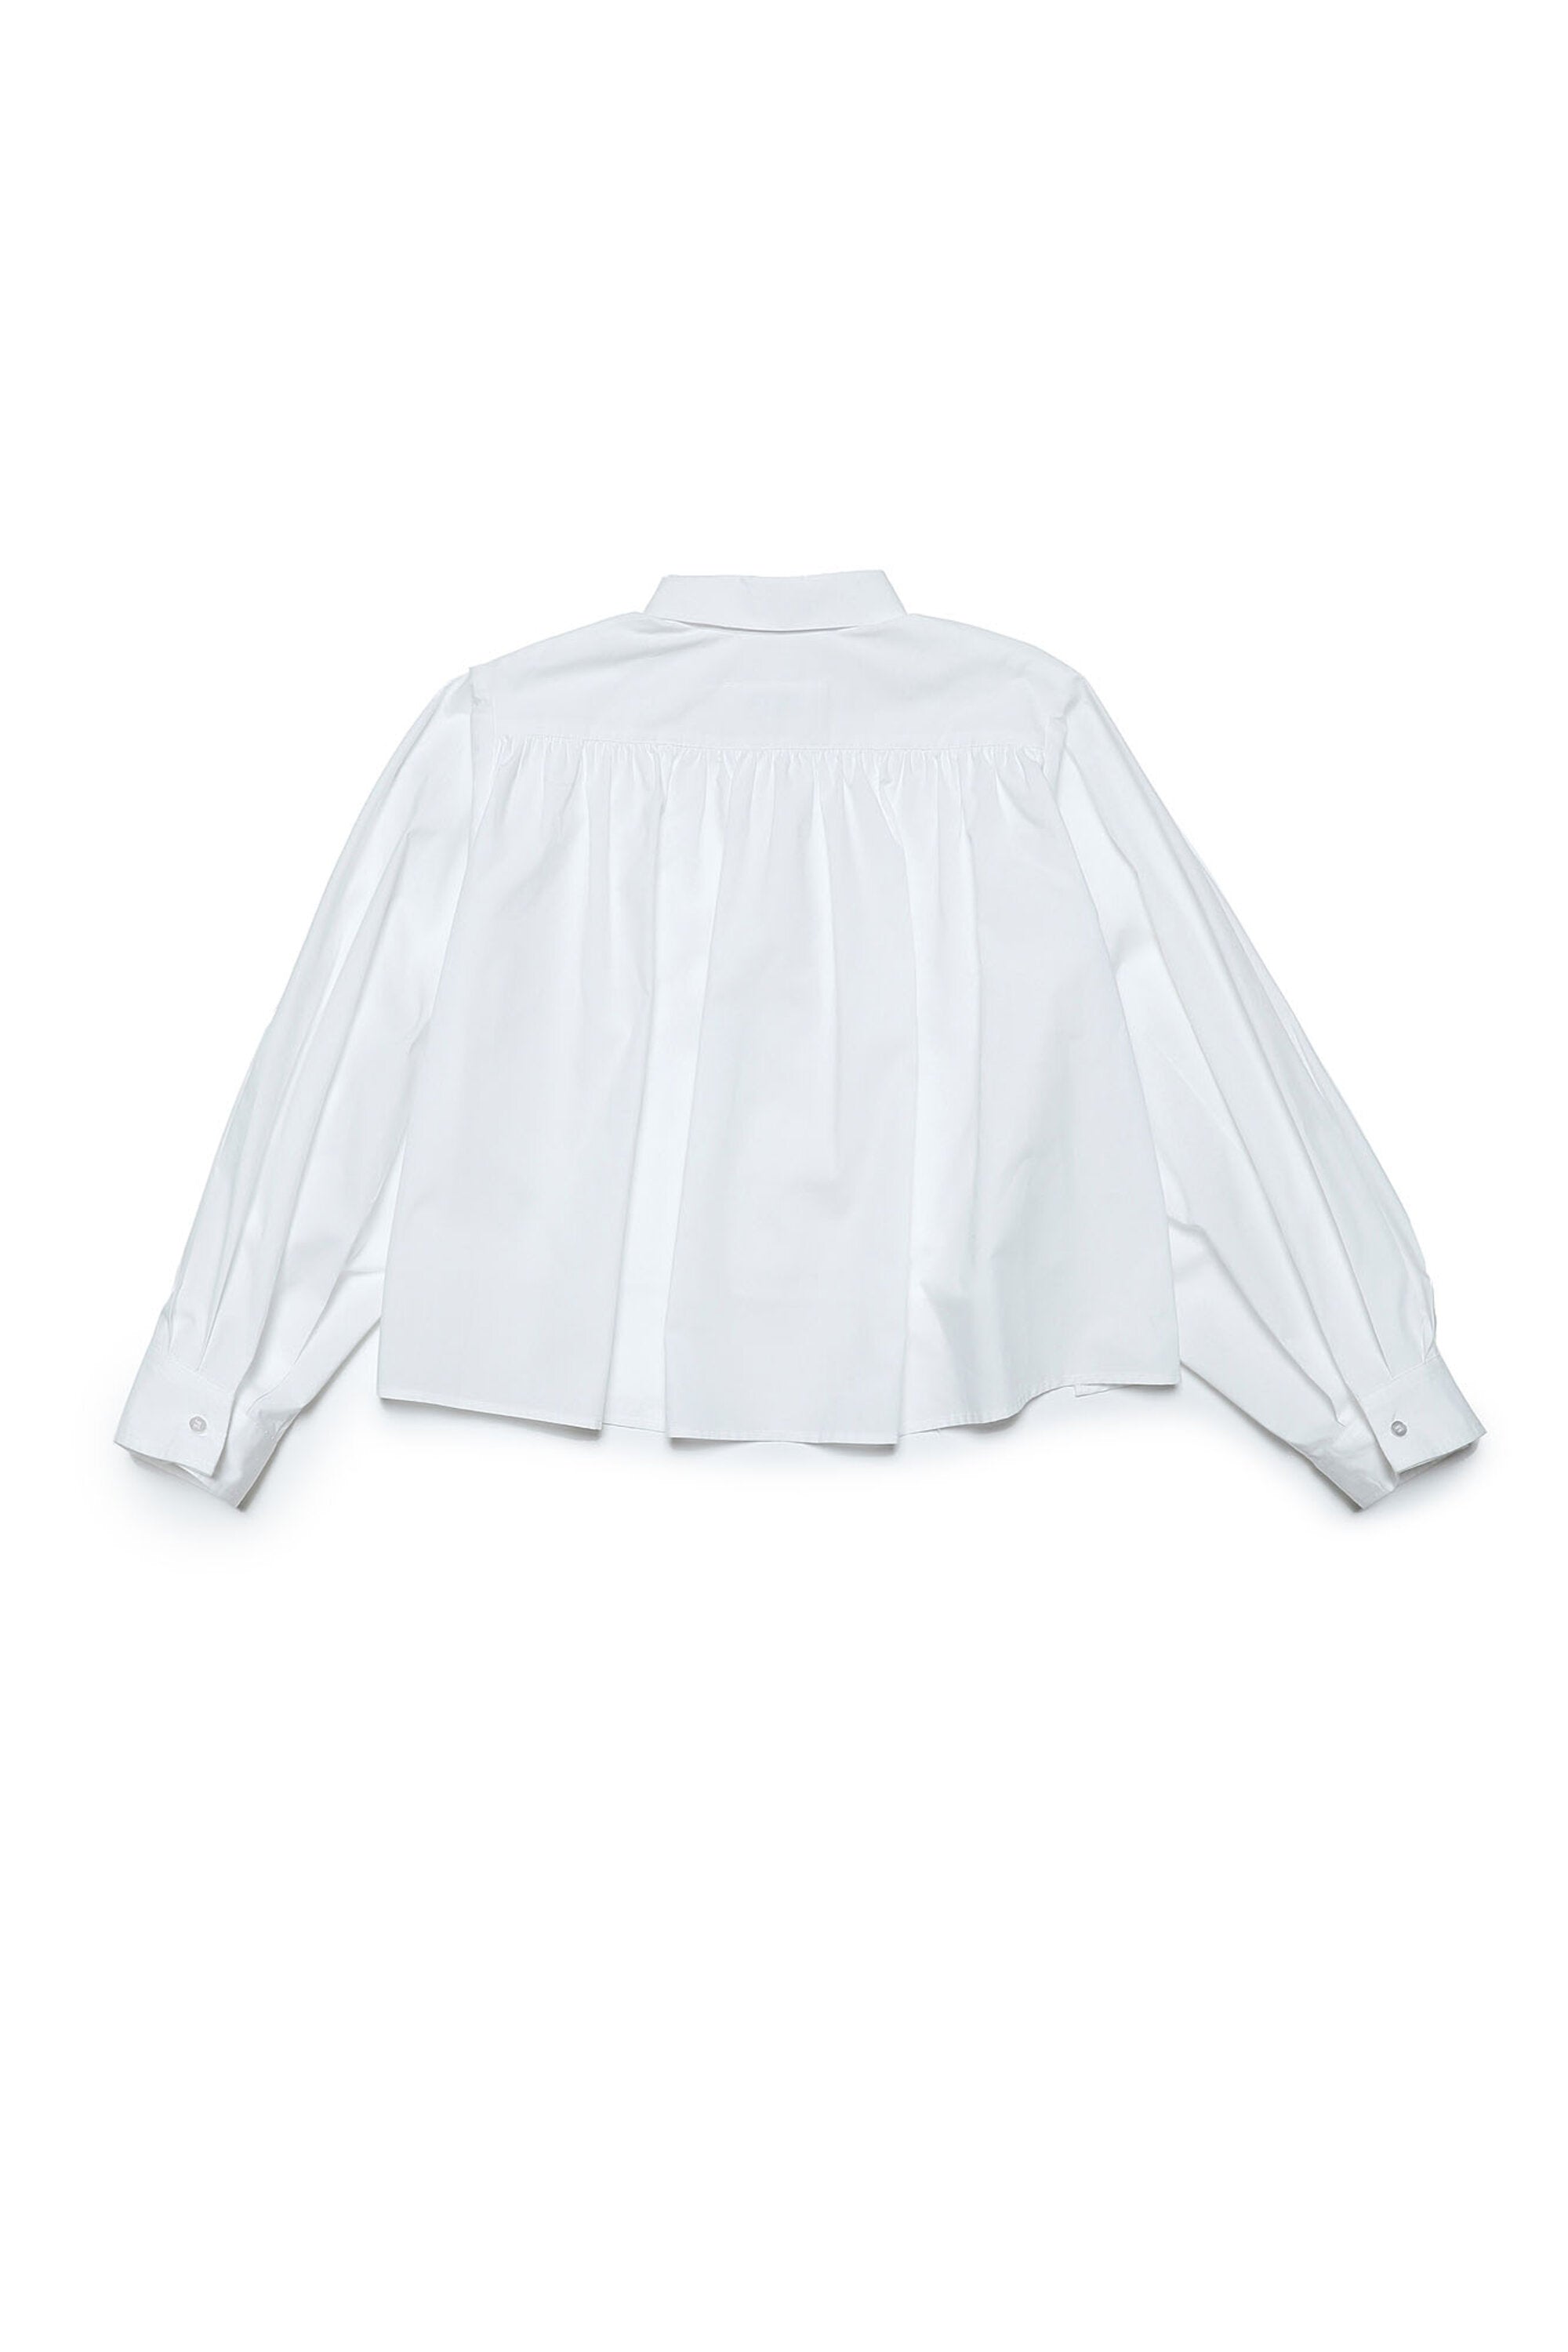 MM6白いアバンギャルドスタイルのポップリンシャツ | Brave Kid